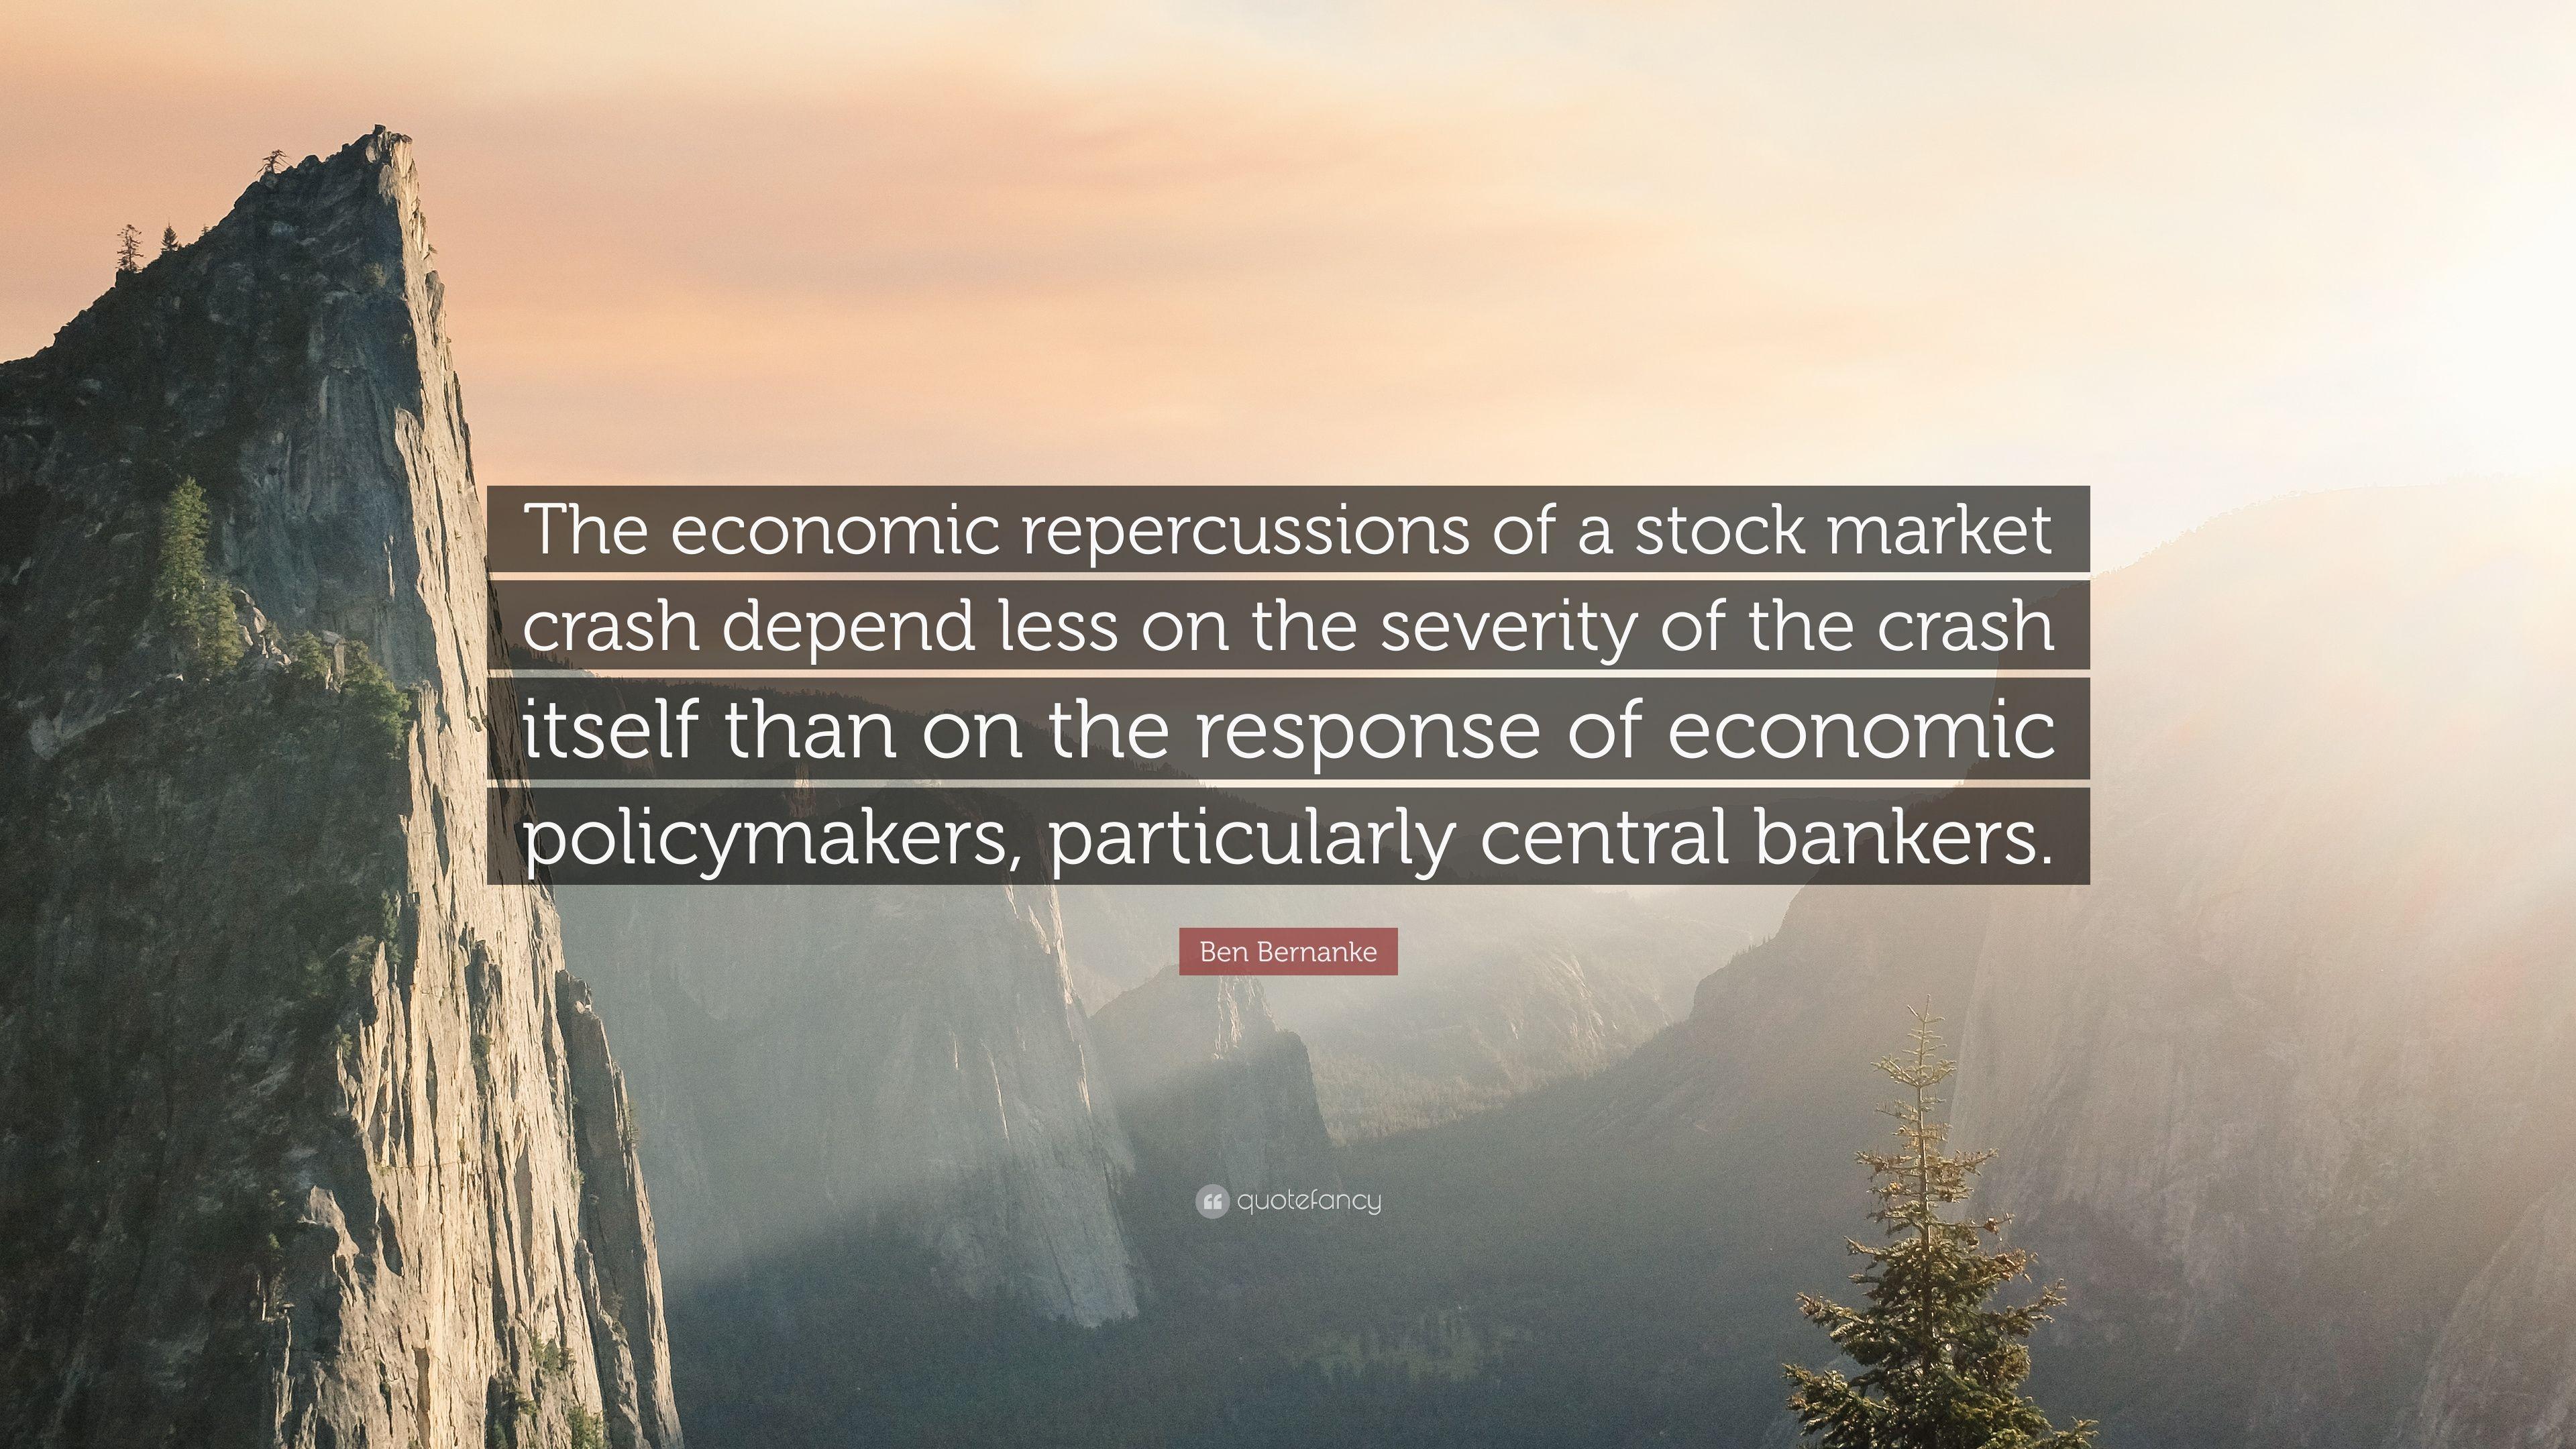 Ben Bernanke Quote: “The economic repercussions of a stock market